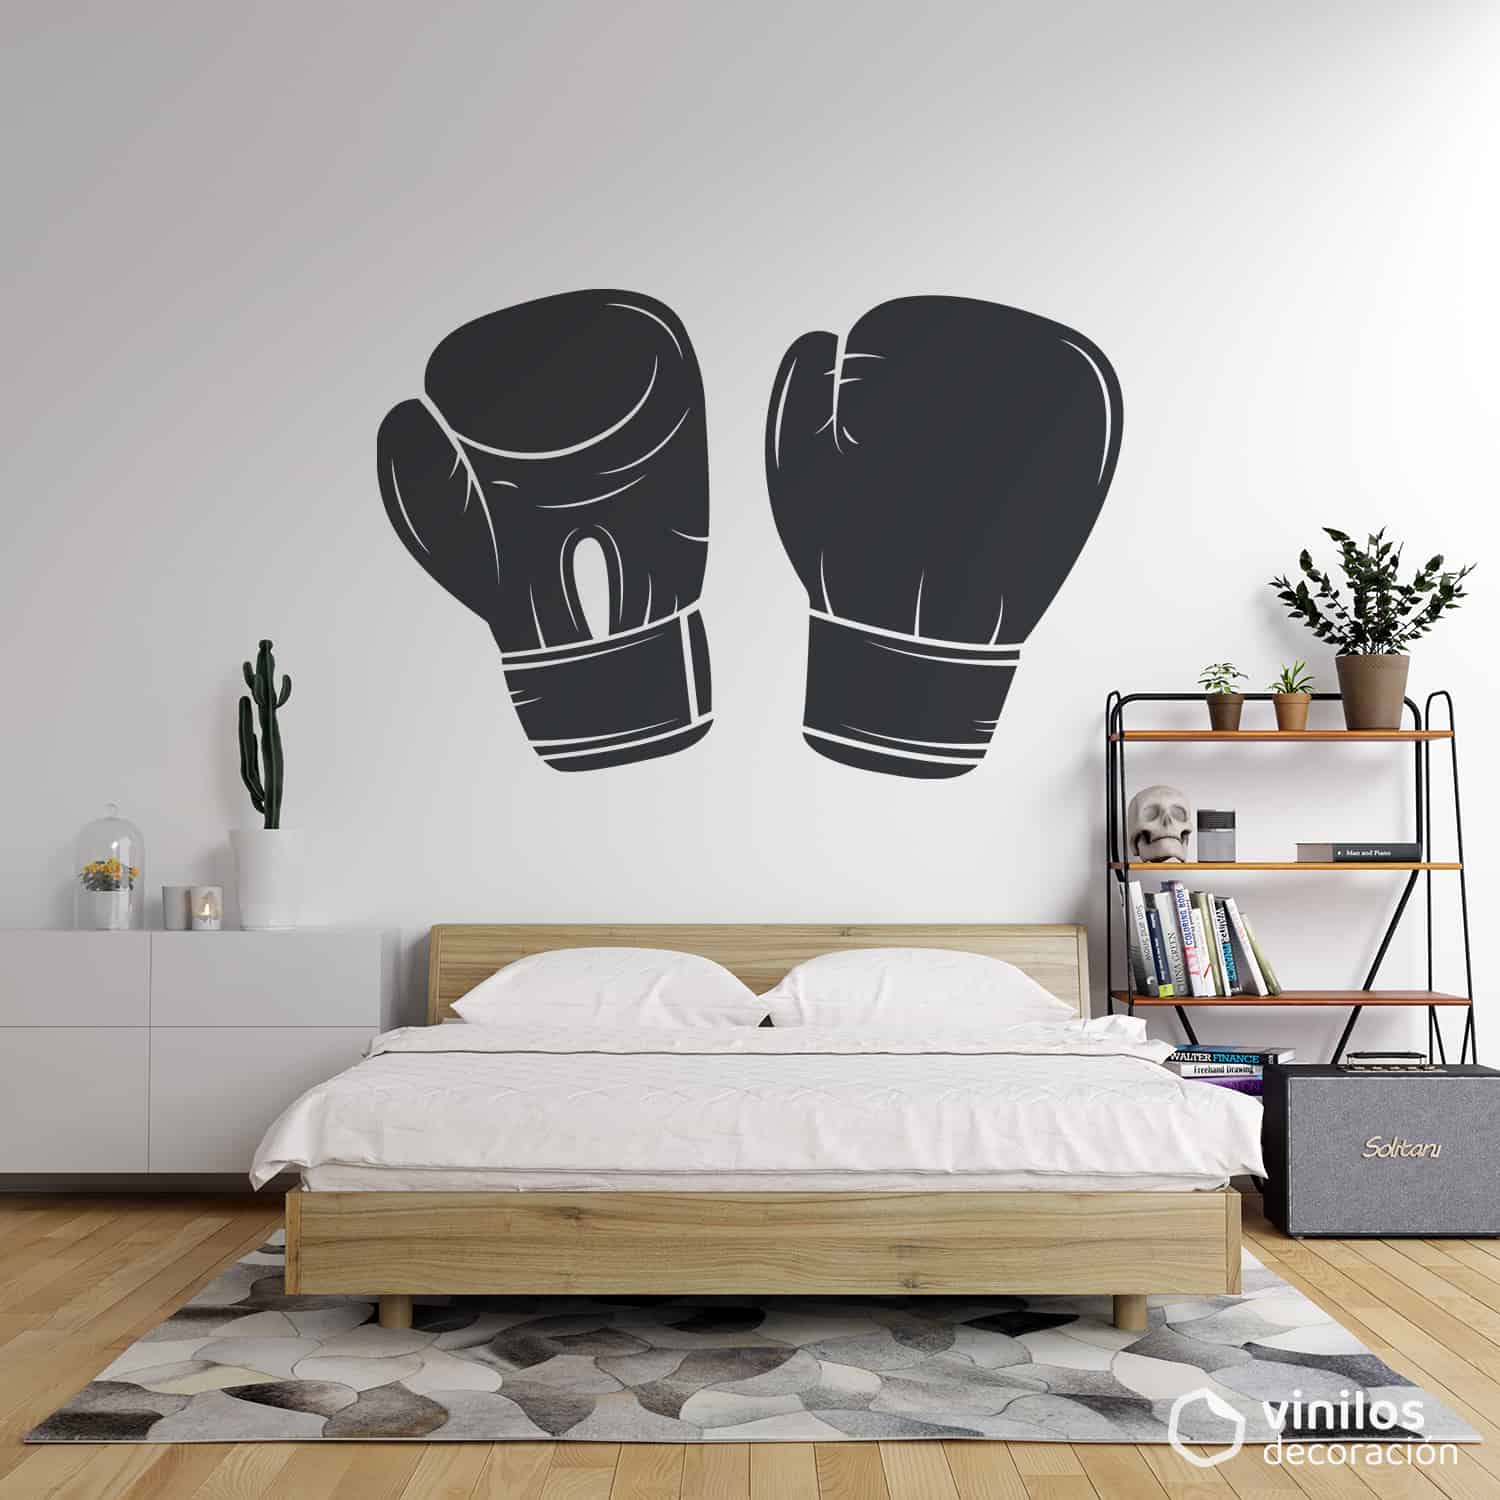 https://www.vinilosdecoracion.es/wp-content/uploads/2021/06/vinilo-decorativo-deportes-guantes-boxeo-habitacion-3.jpg